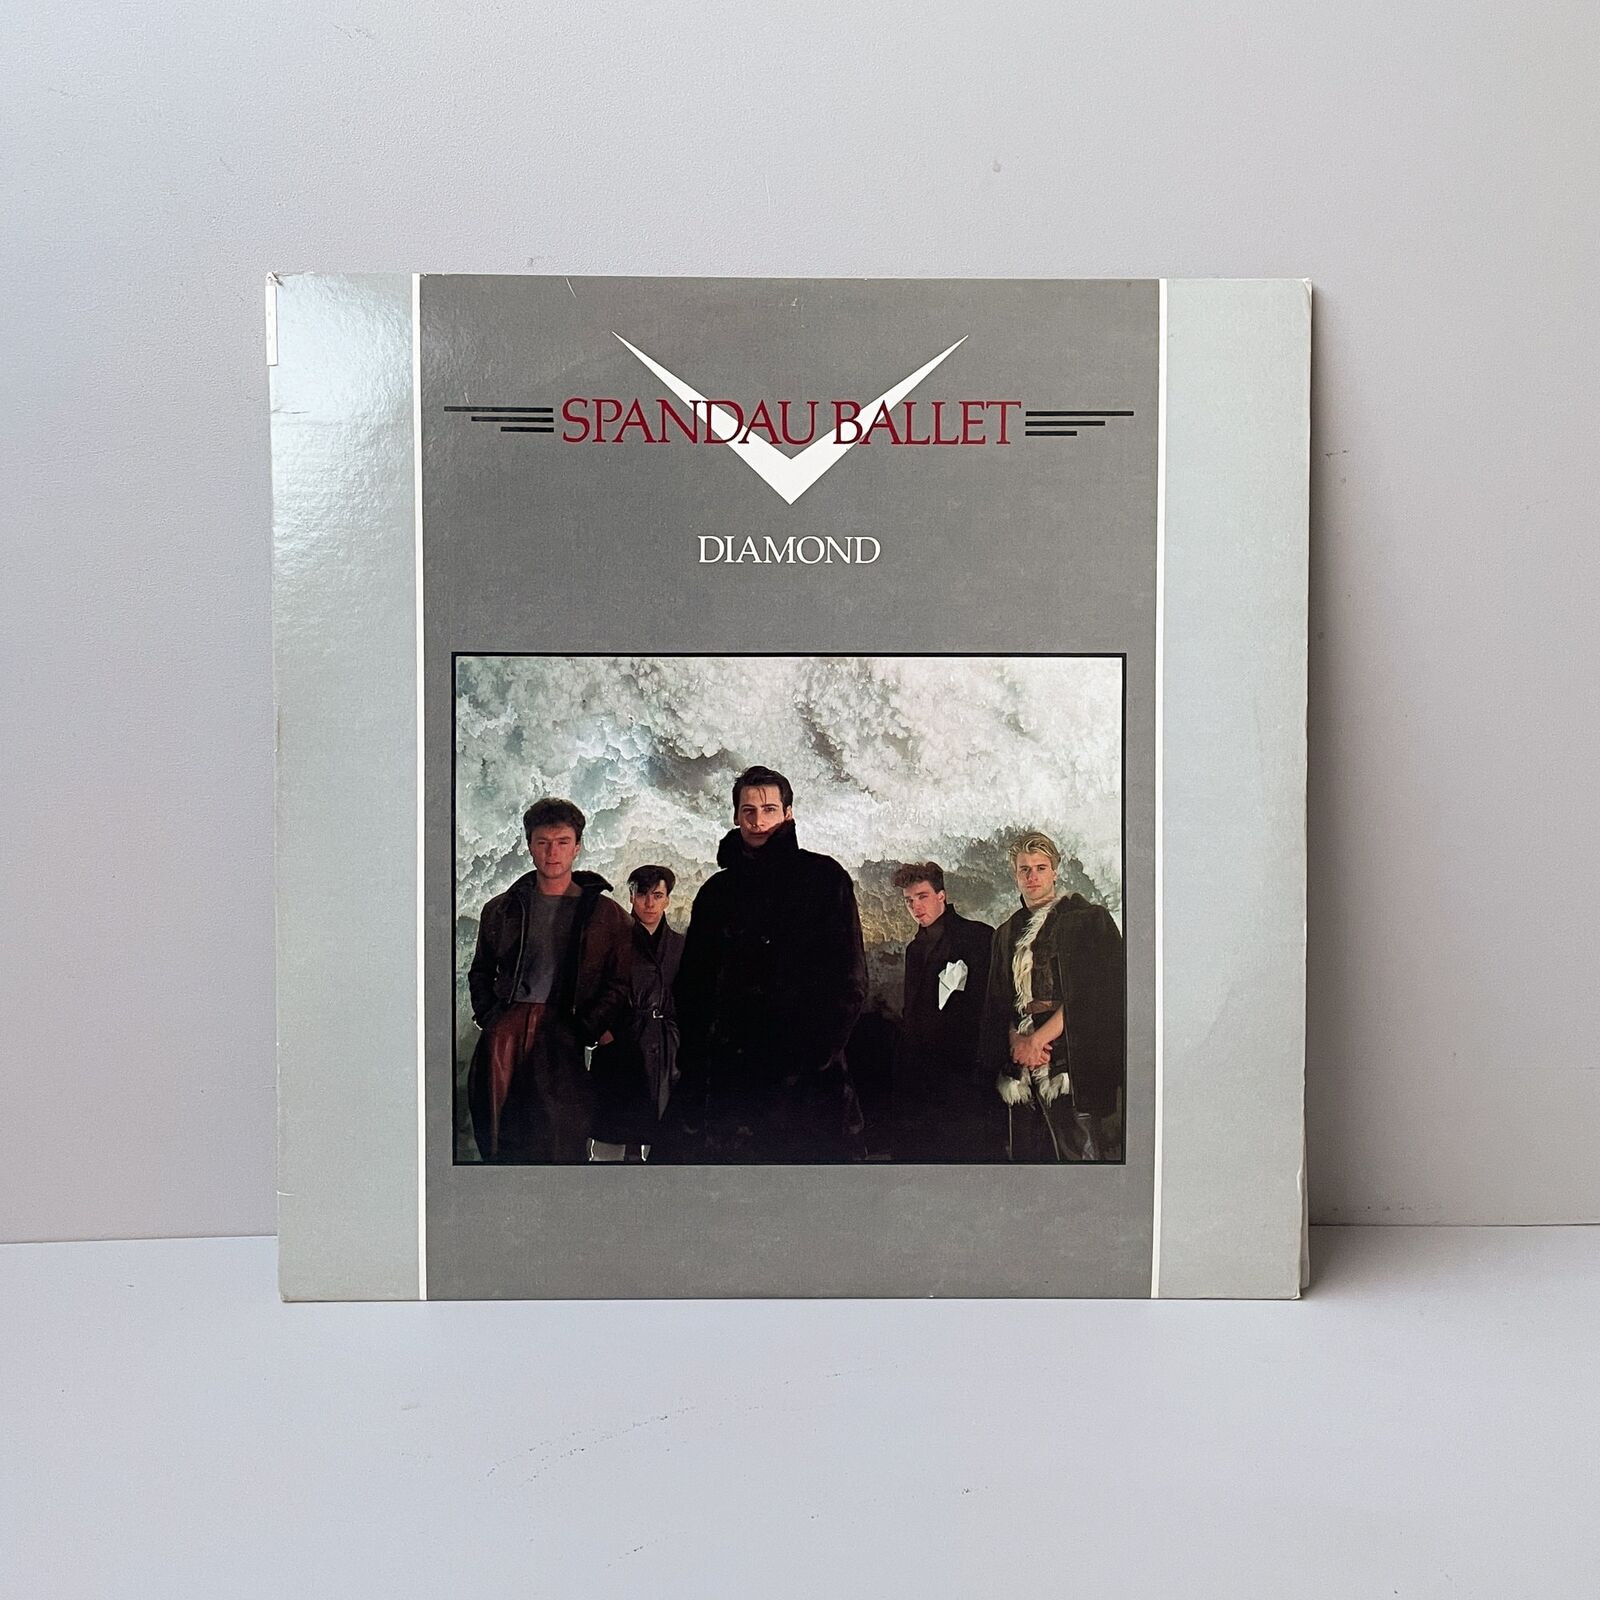 Spandau Ballet – Diamond- Vinyl LP Record - 1982